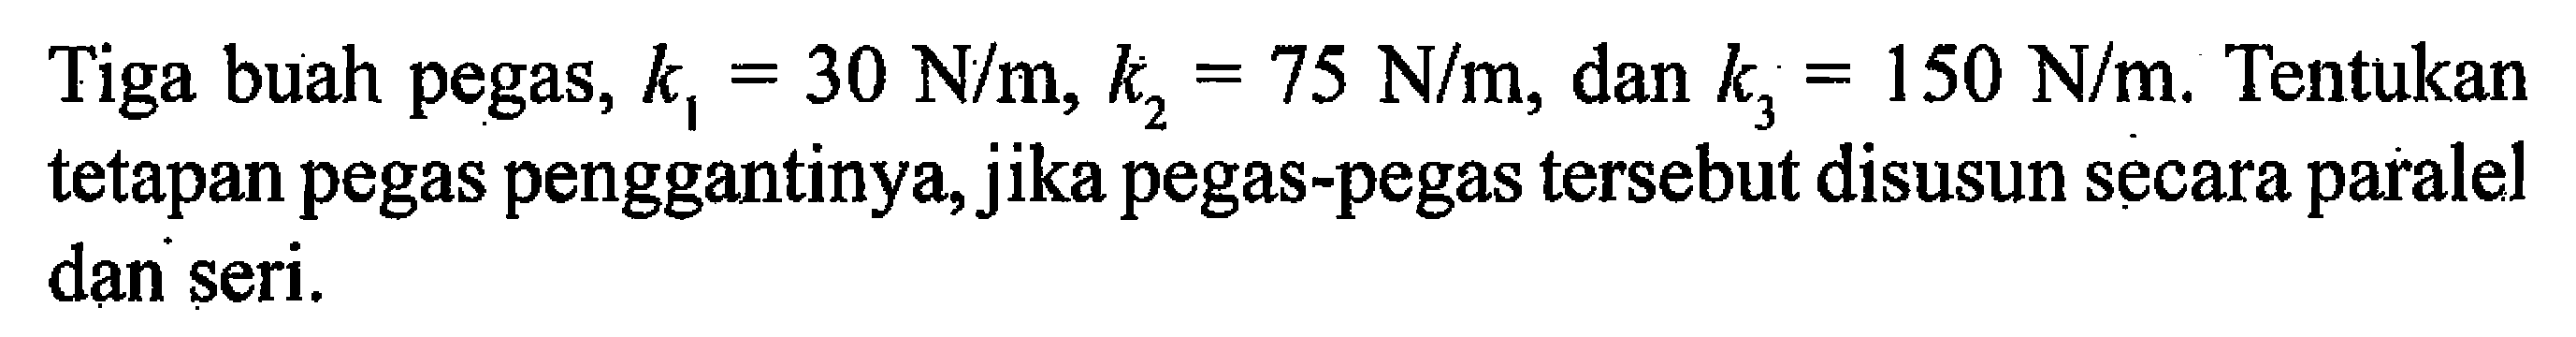 Tiga buah pegas, k1=30 N/m, k2=75 N/m , dan k3=150 N/m. Tentukan tetapan pegas penggantinya, jika pegas-pegas tersebut disusun secara paralel dan seri.